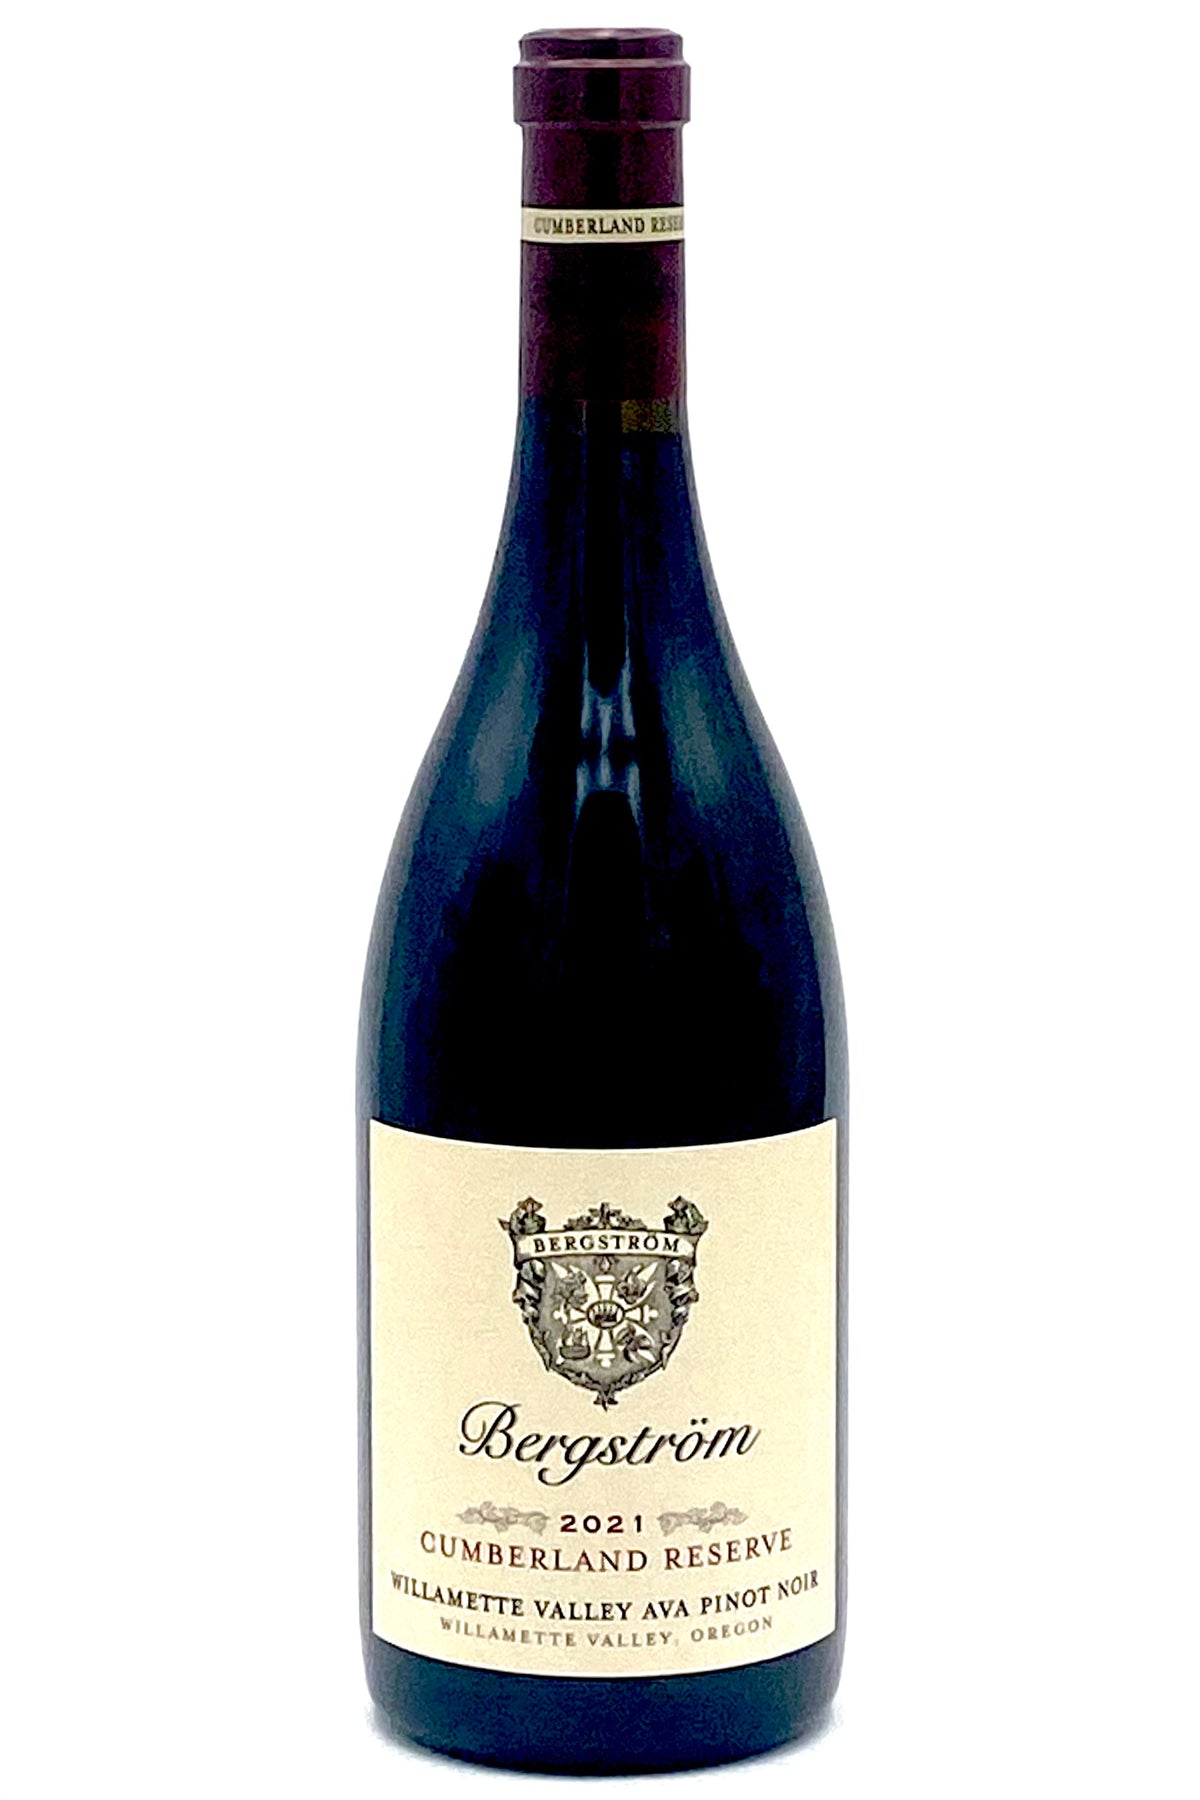 Bergstrom 2021 Pinot Noir Cumberland Reserve Willamette Valley